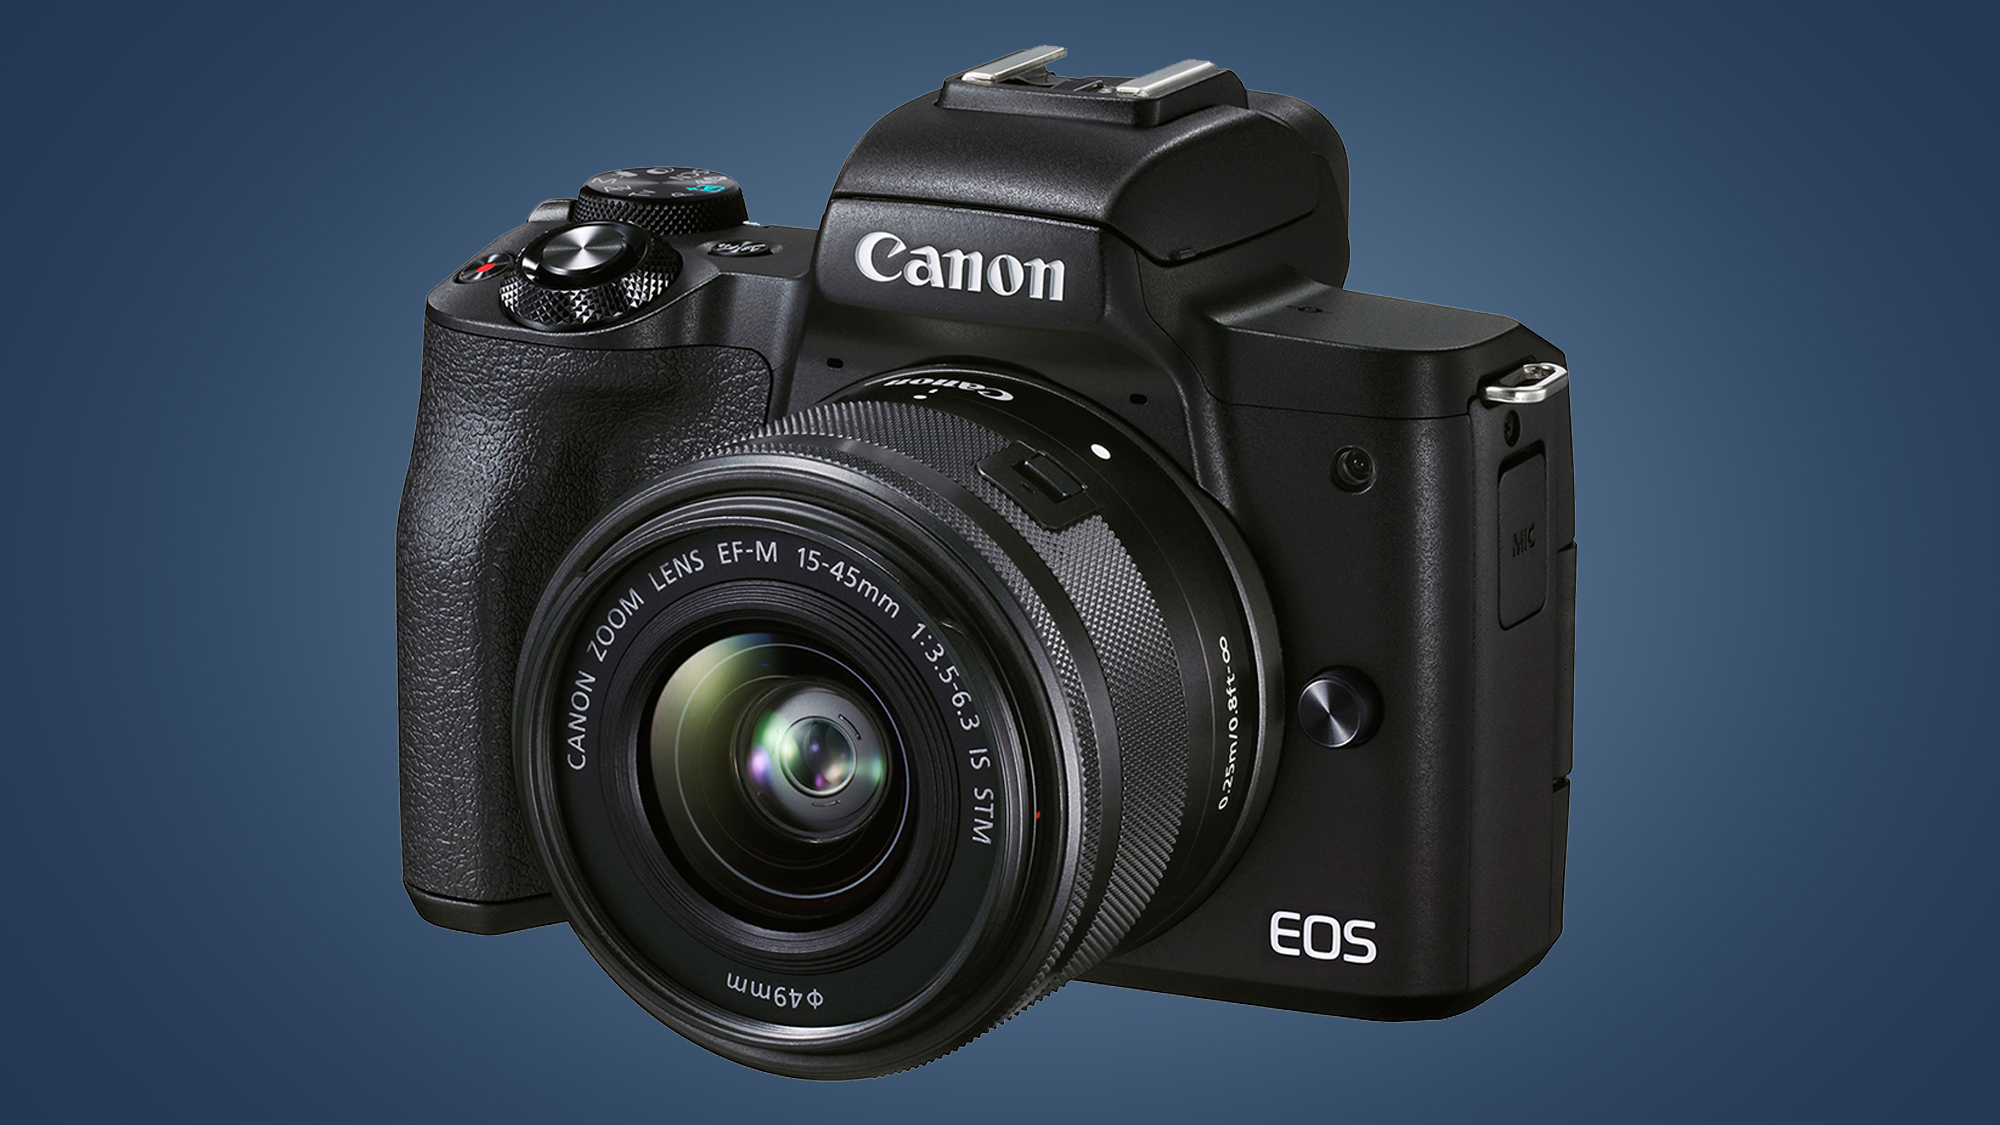 Canon EOS M50 Mark II: A Mirrorless Compact Camera